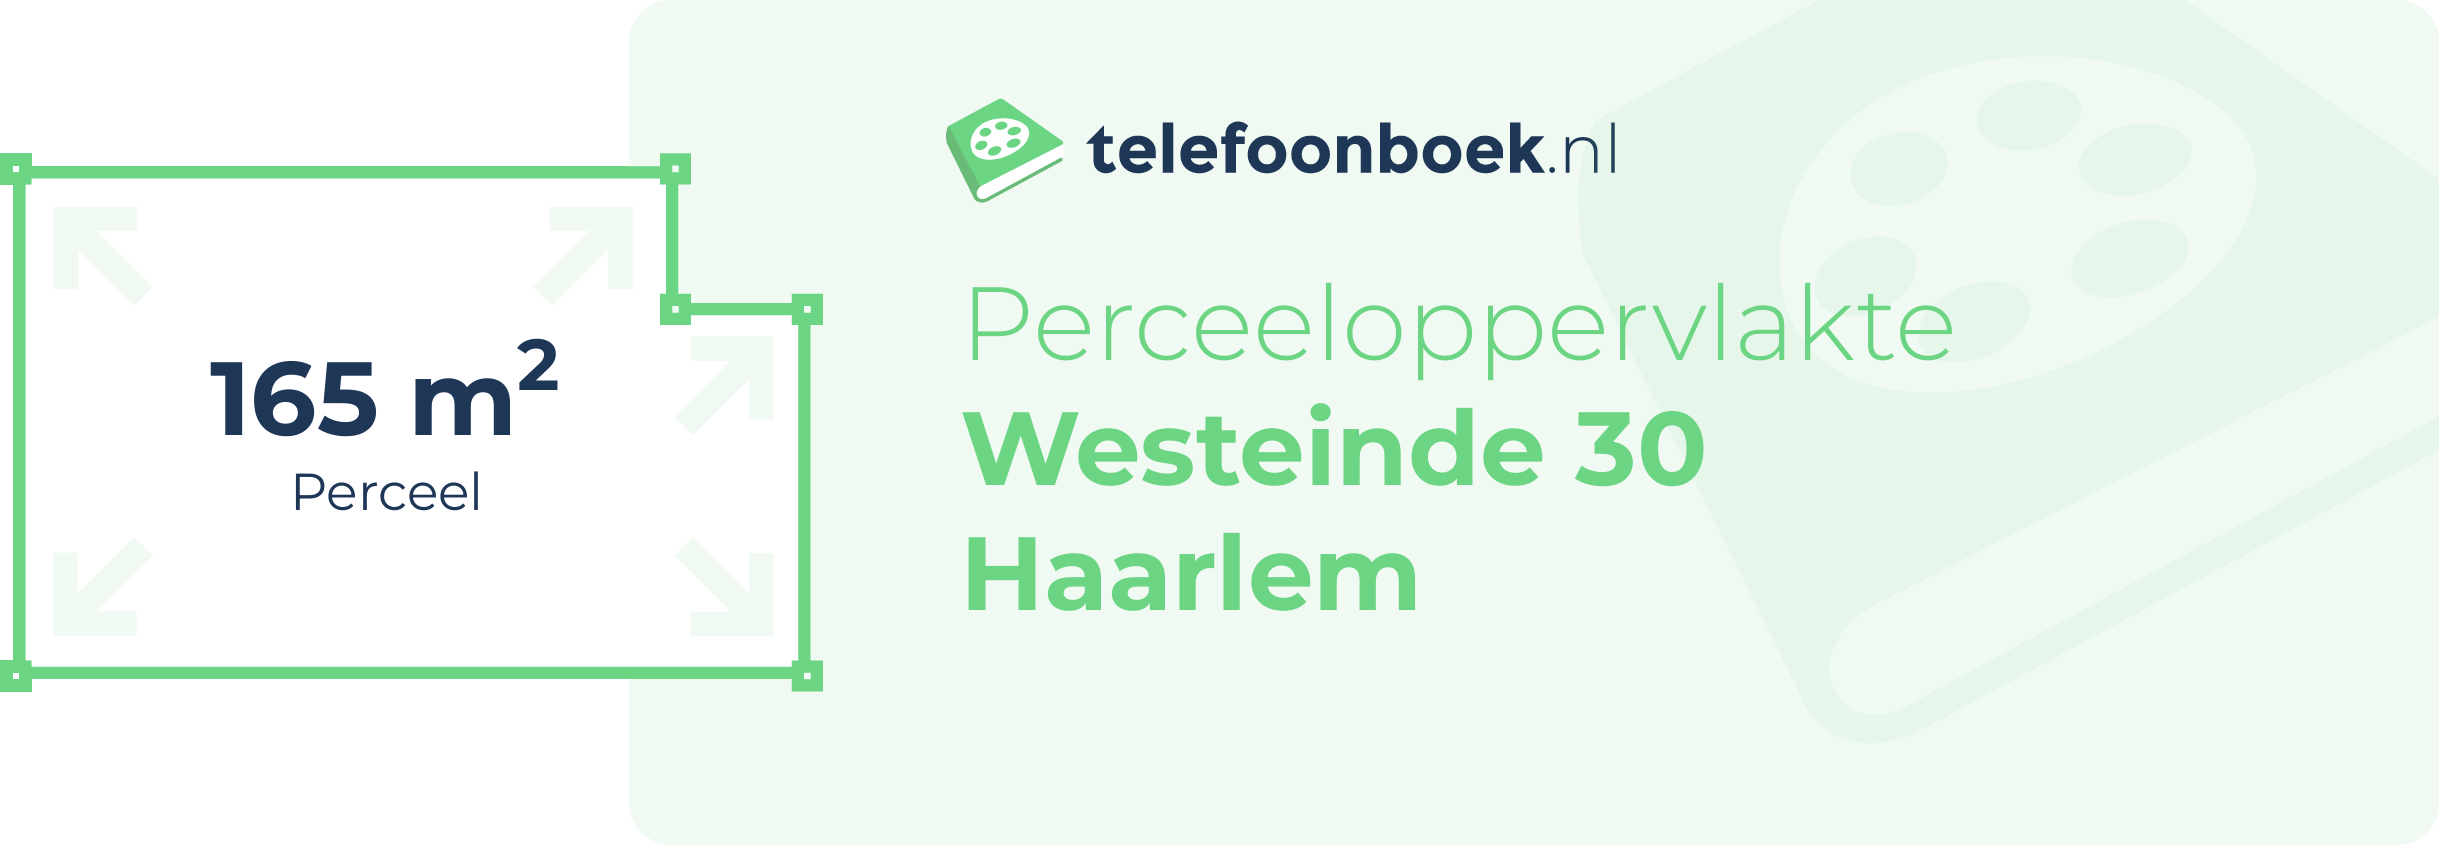 Perceeloppervlakte Westeinde 30 Haarlem